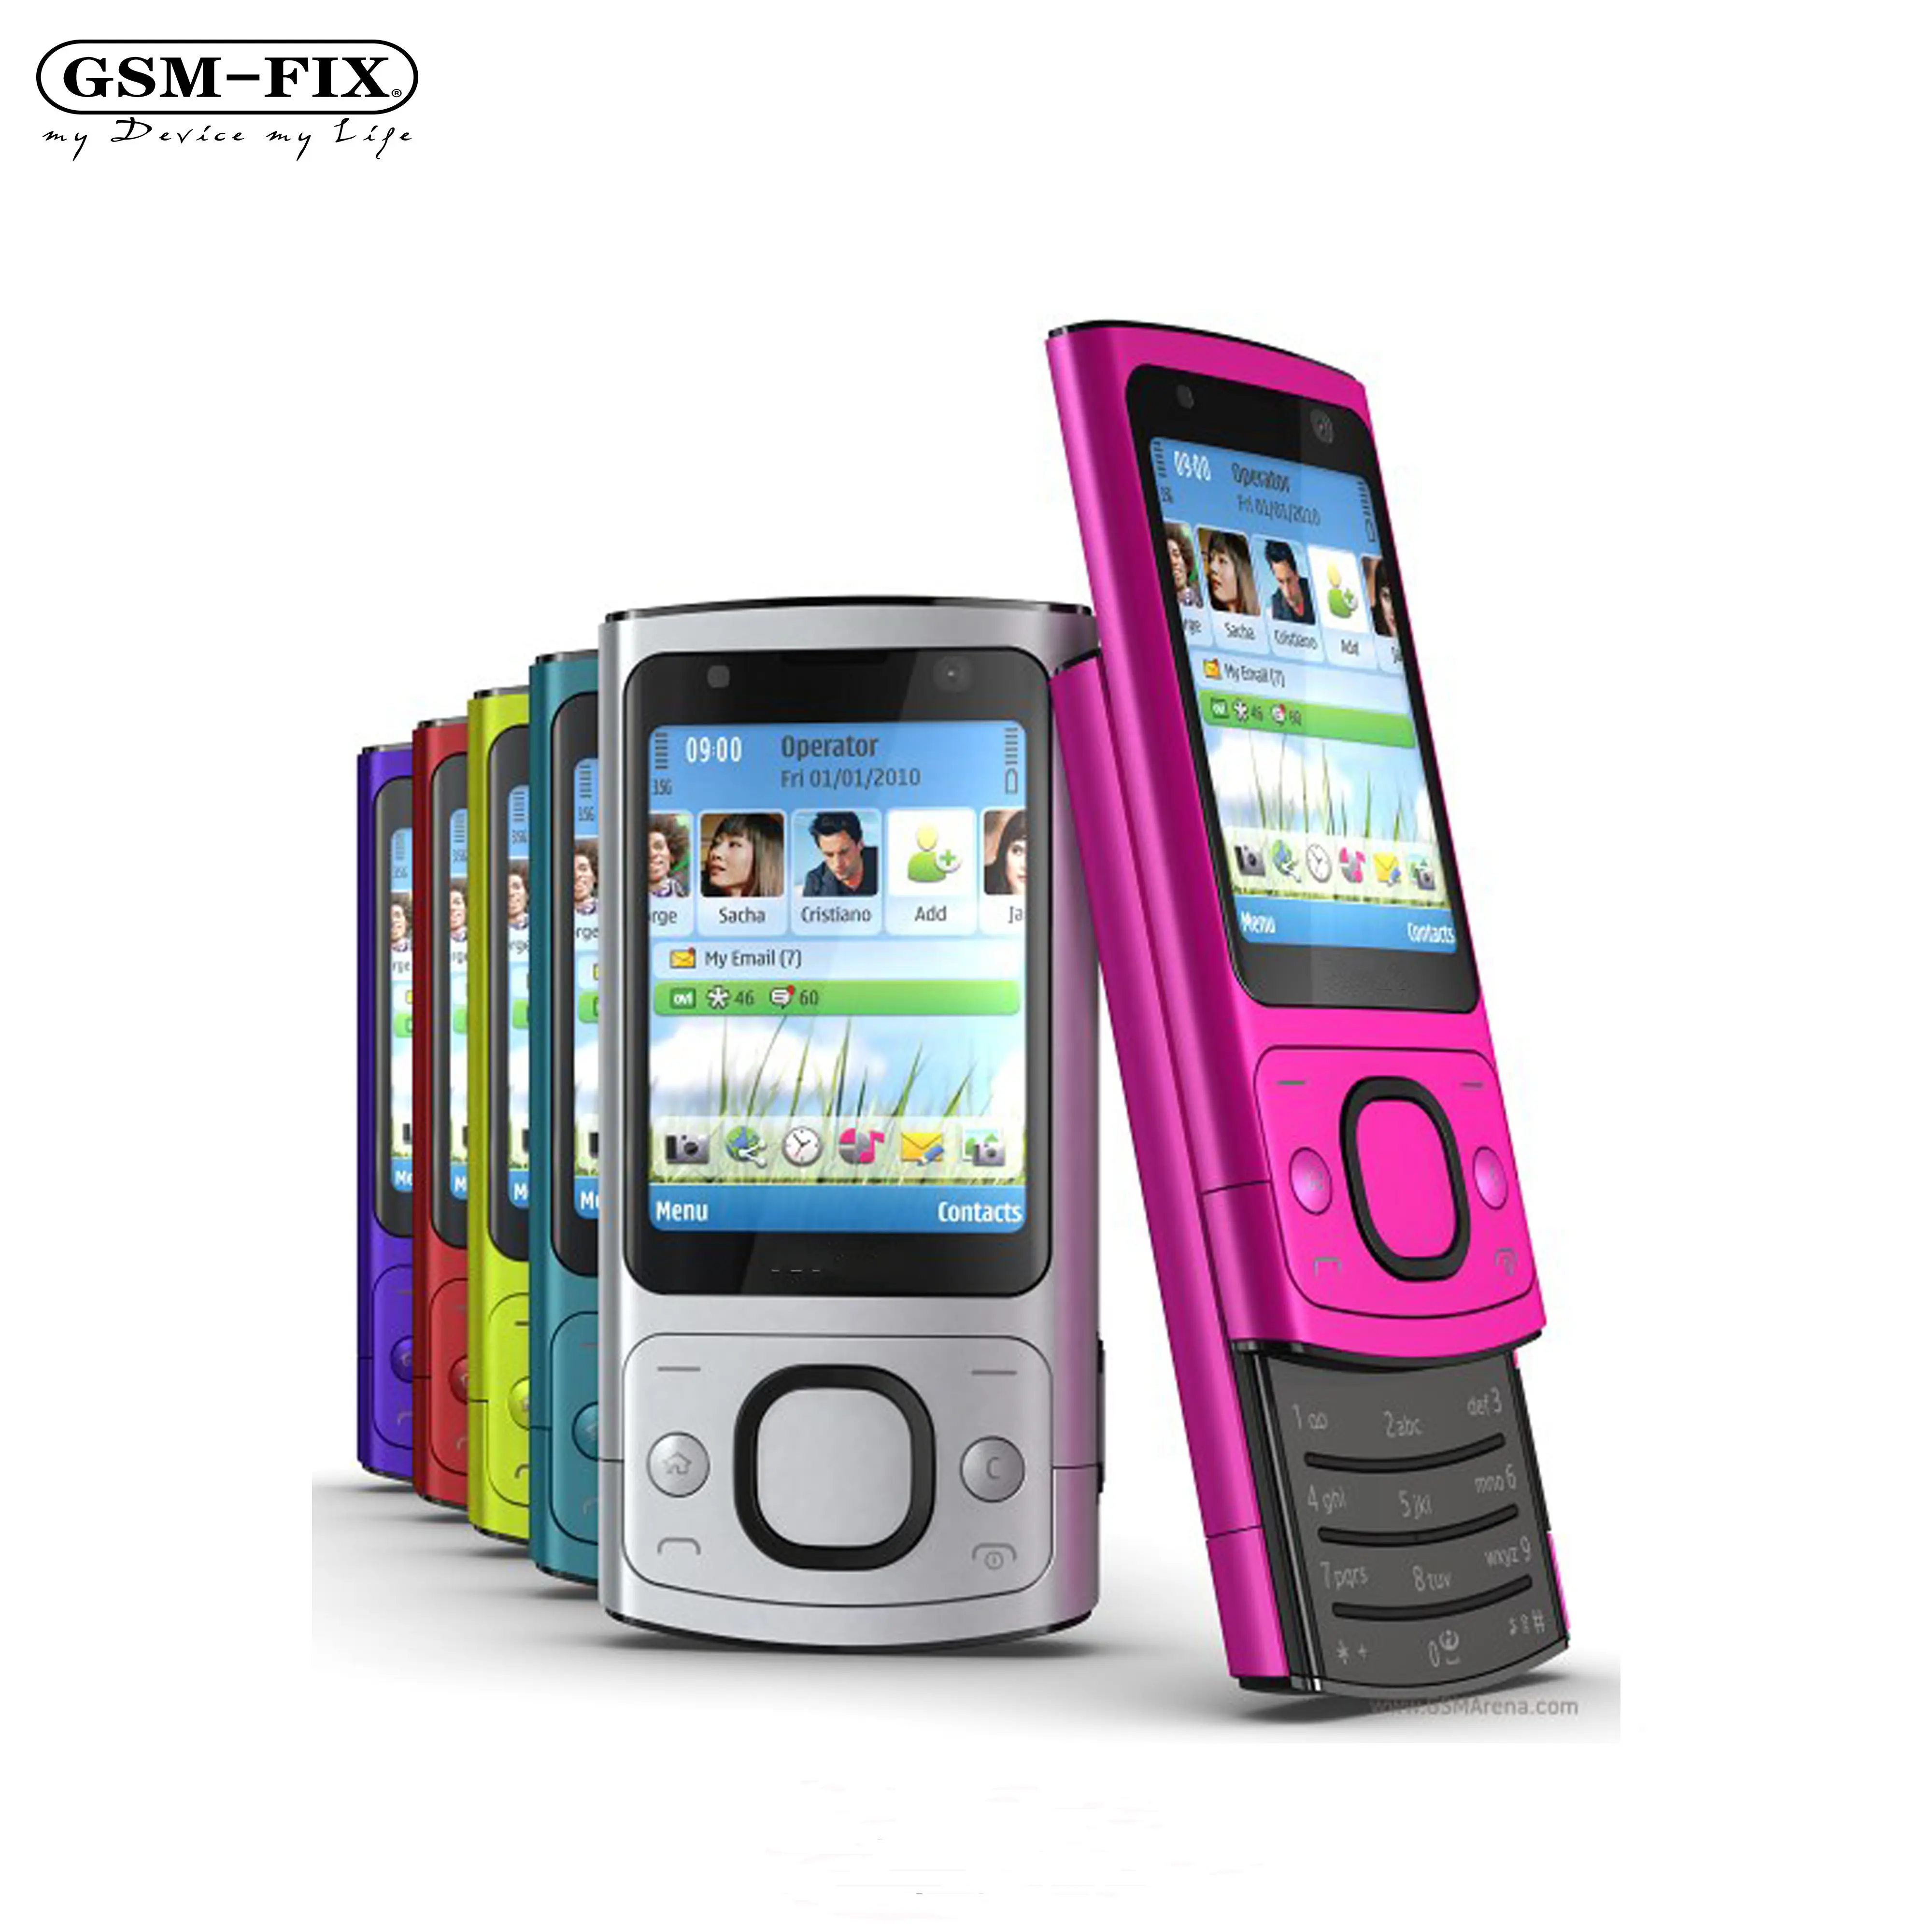 GSM-FIX Original 6700s For NOKIA Mobile Phone Camera 5.0MP Bluetooth Java Unlocked 6700 slide Phone